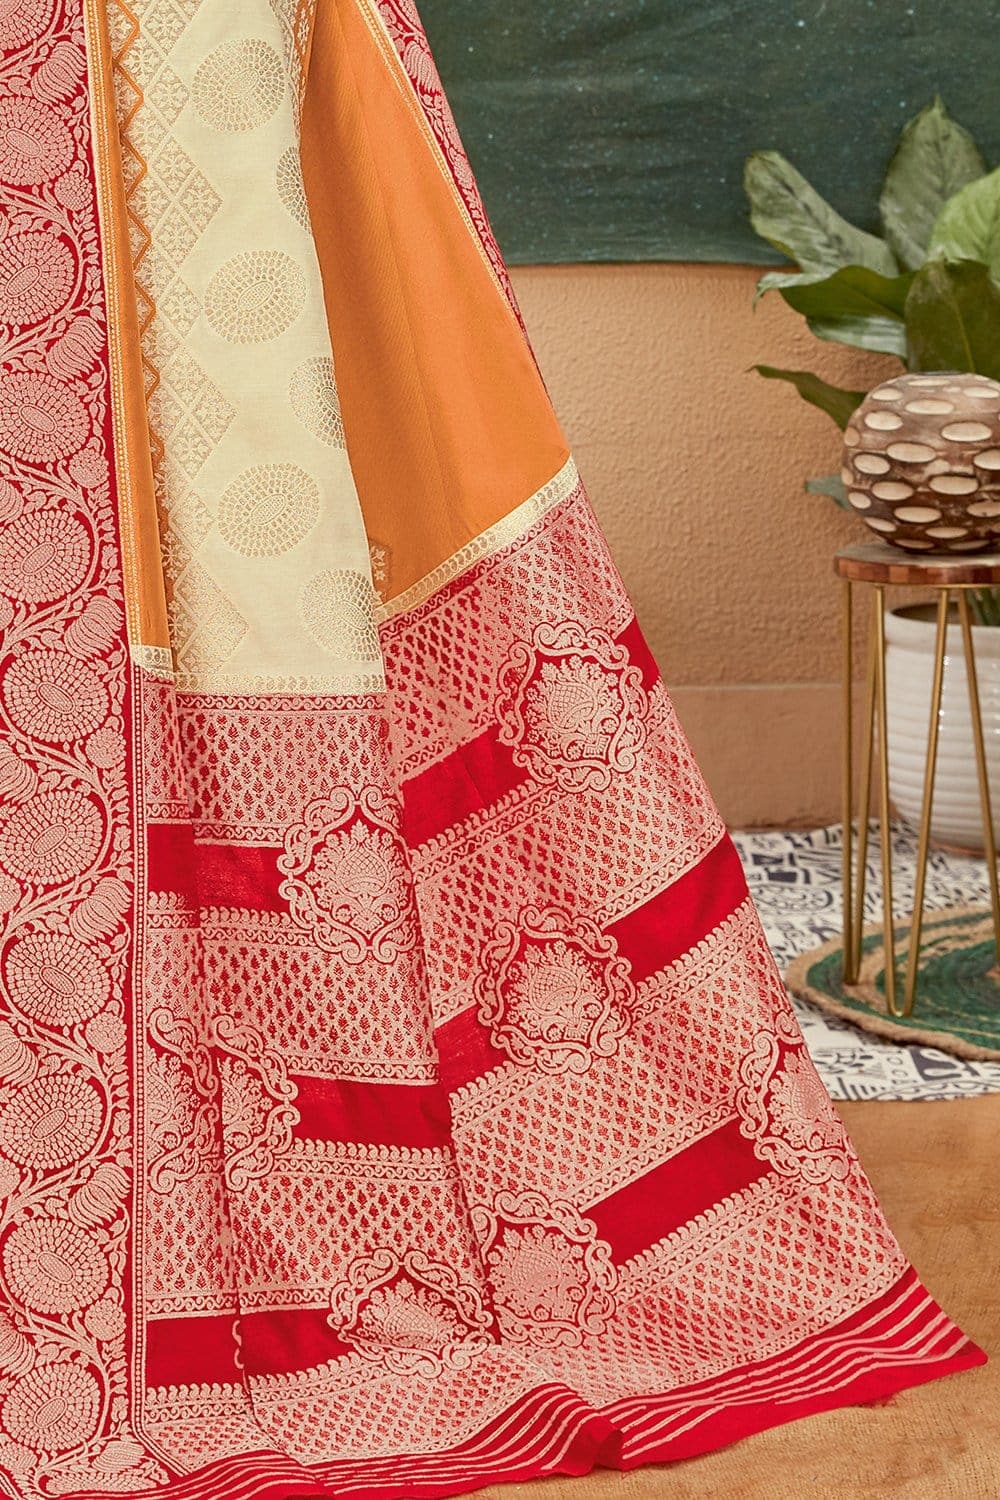 Beautiful royal orange and cream patola saree - Buy online on Karagiri - Free shipping to USA